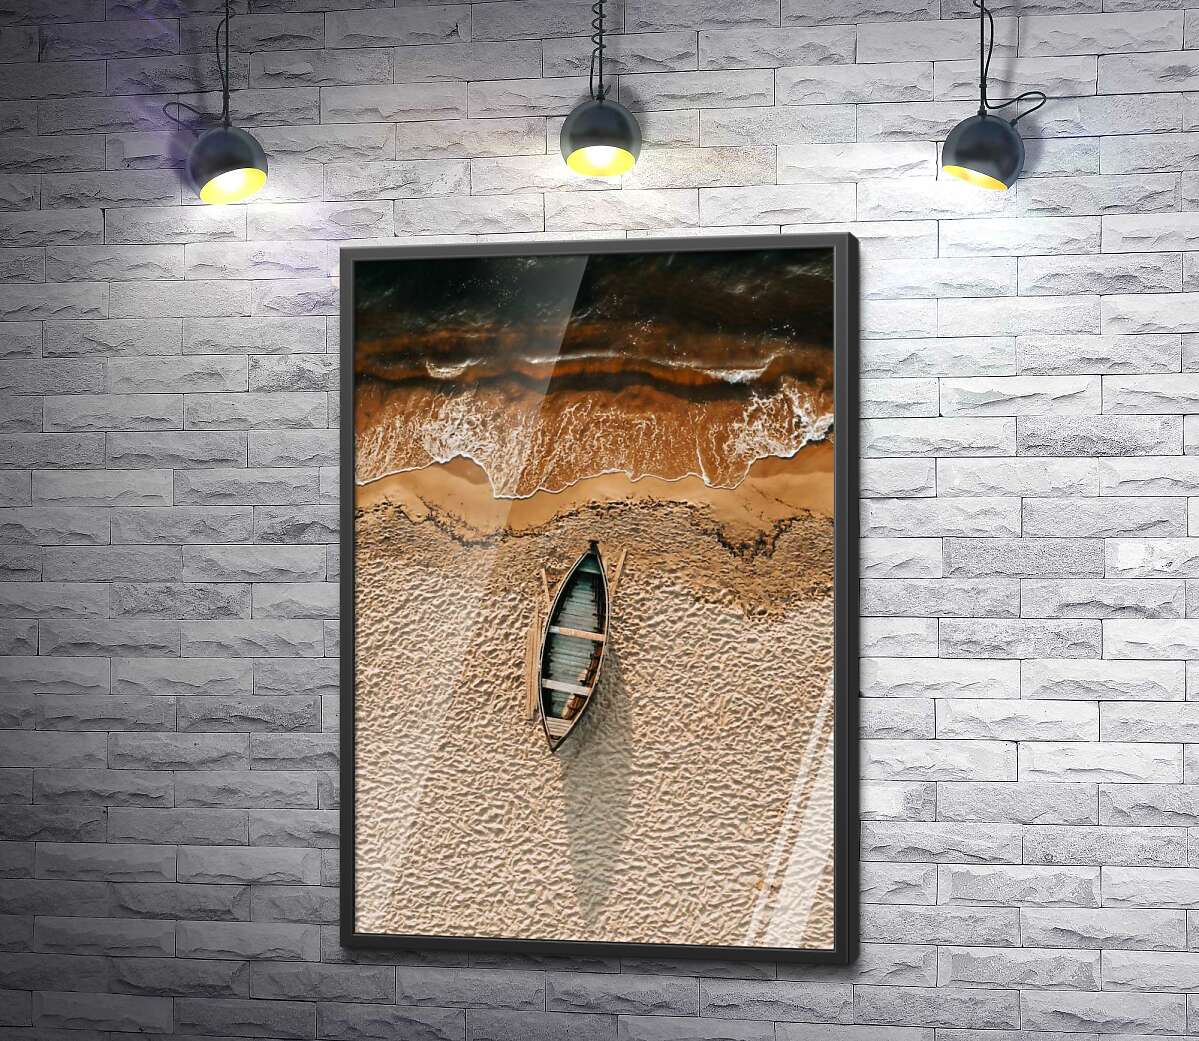 постер Одинокая лодка на песчаном берегу океана